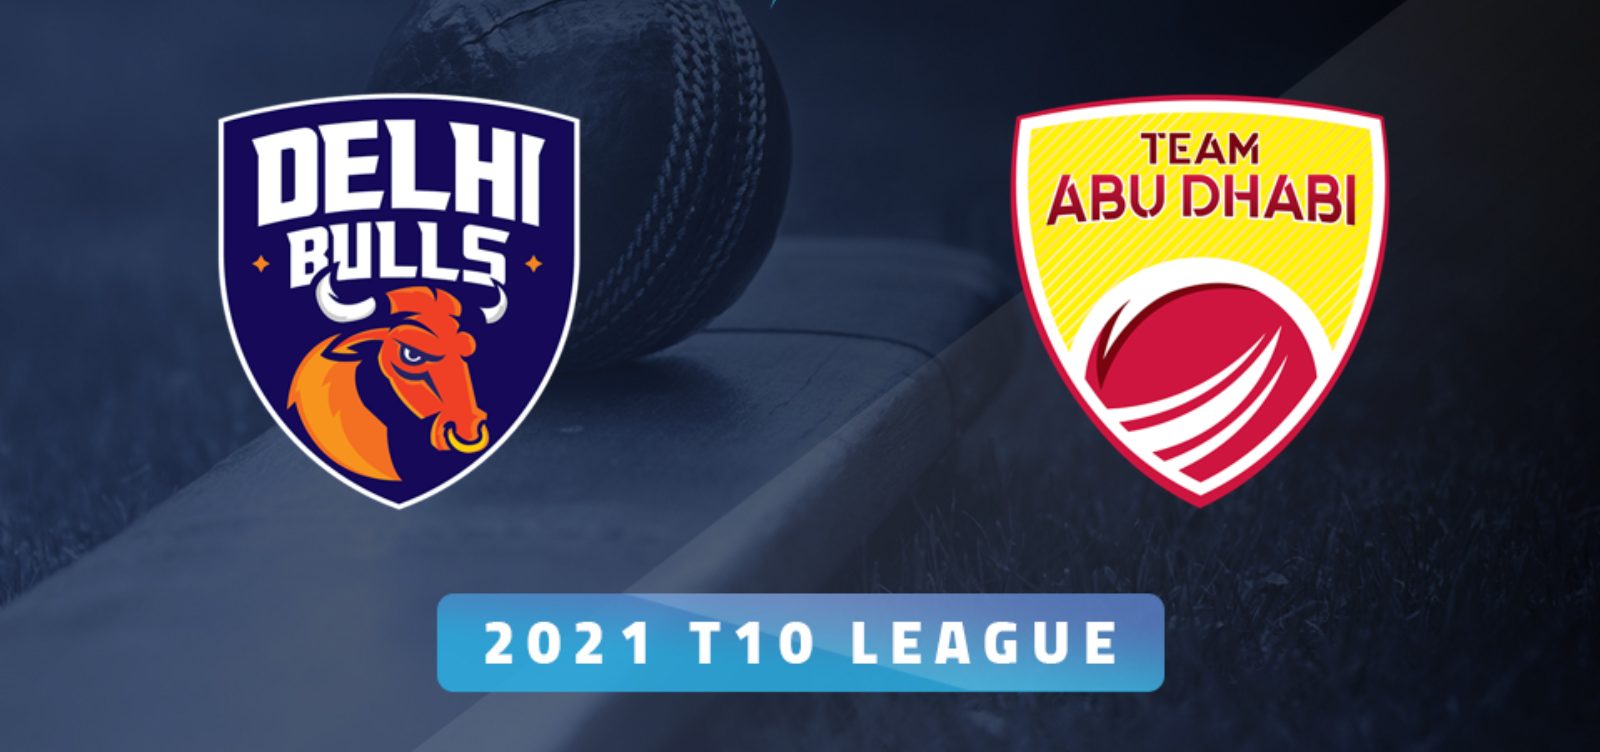 Abu Dhabi T10 LIVE Preview, Squad News, Head to Head stats and Dream11 Prediction for Delhi Bulls vs Team Abu Dhabi